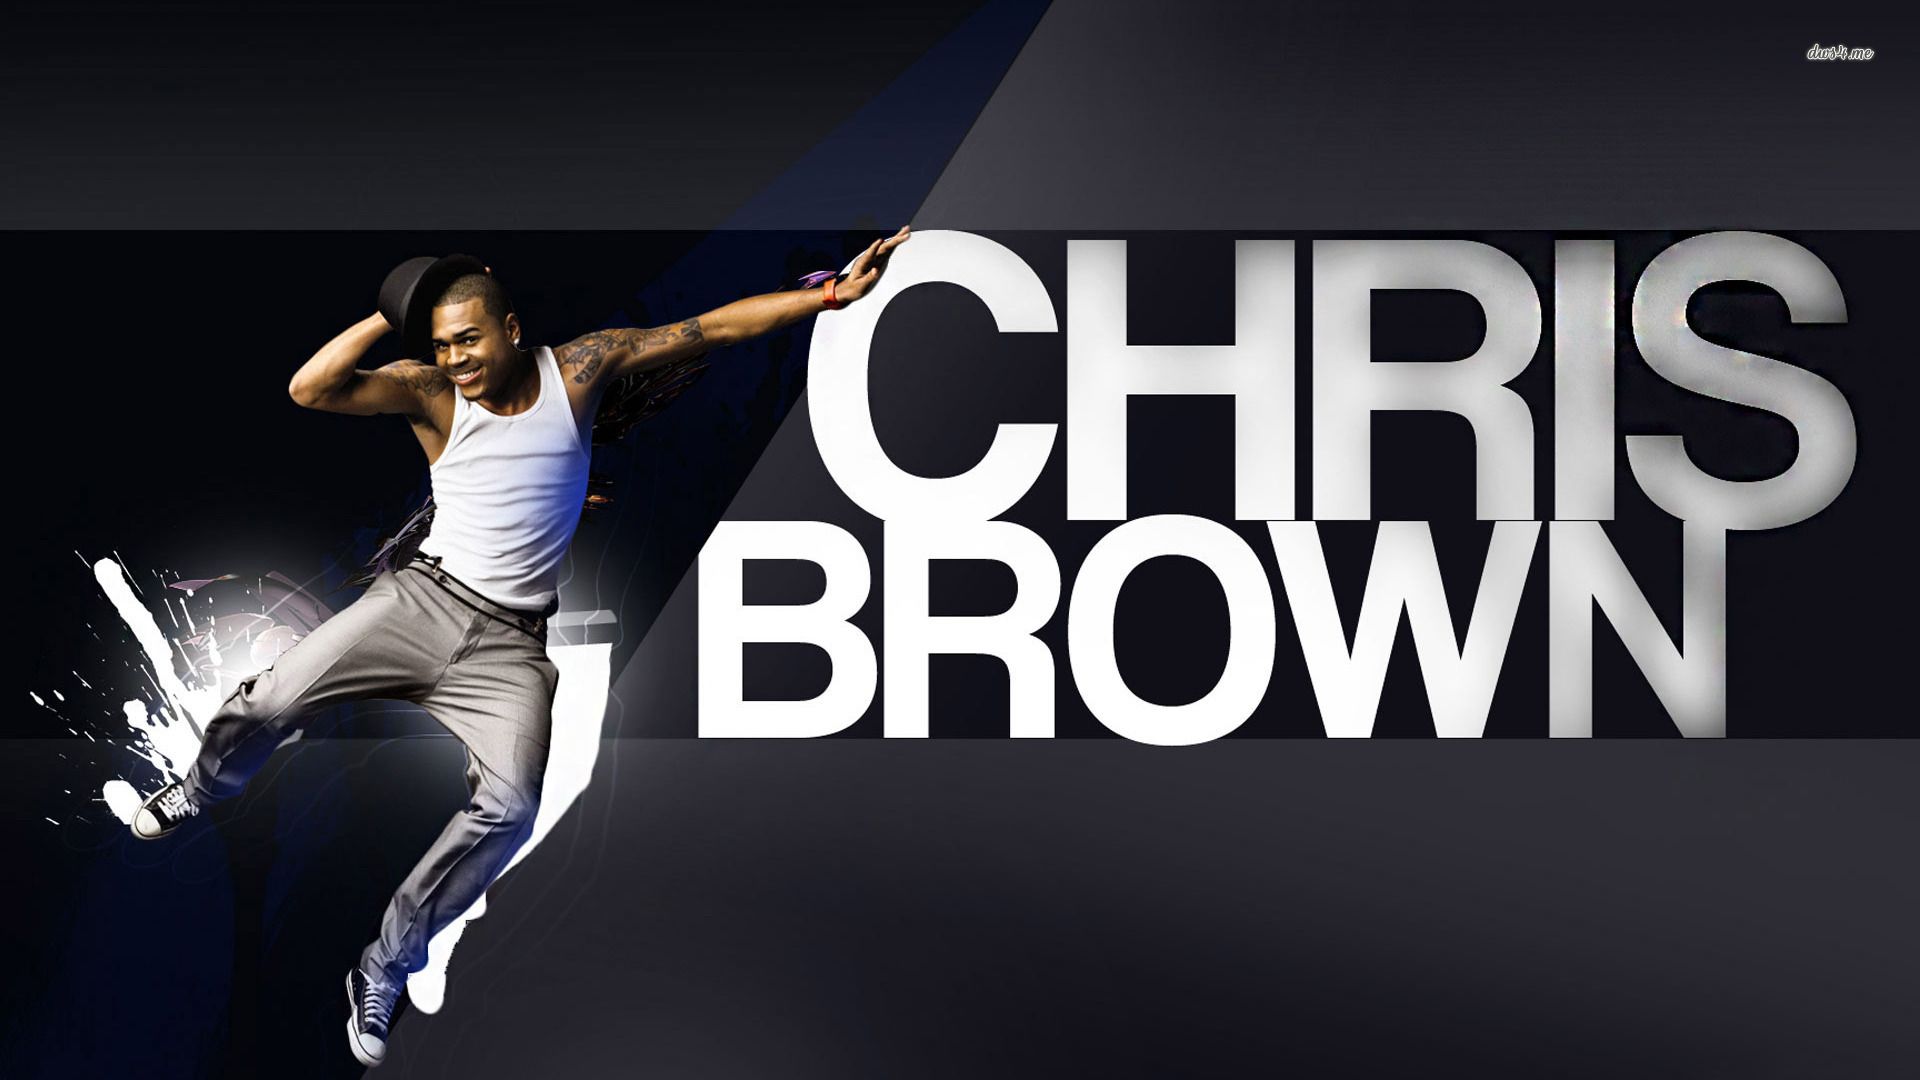 Chris Brown Fondos de pantalla Full HD # Y9AMRJ9 | WallpapersExpert.com